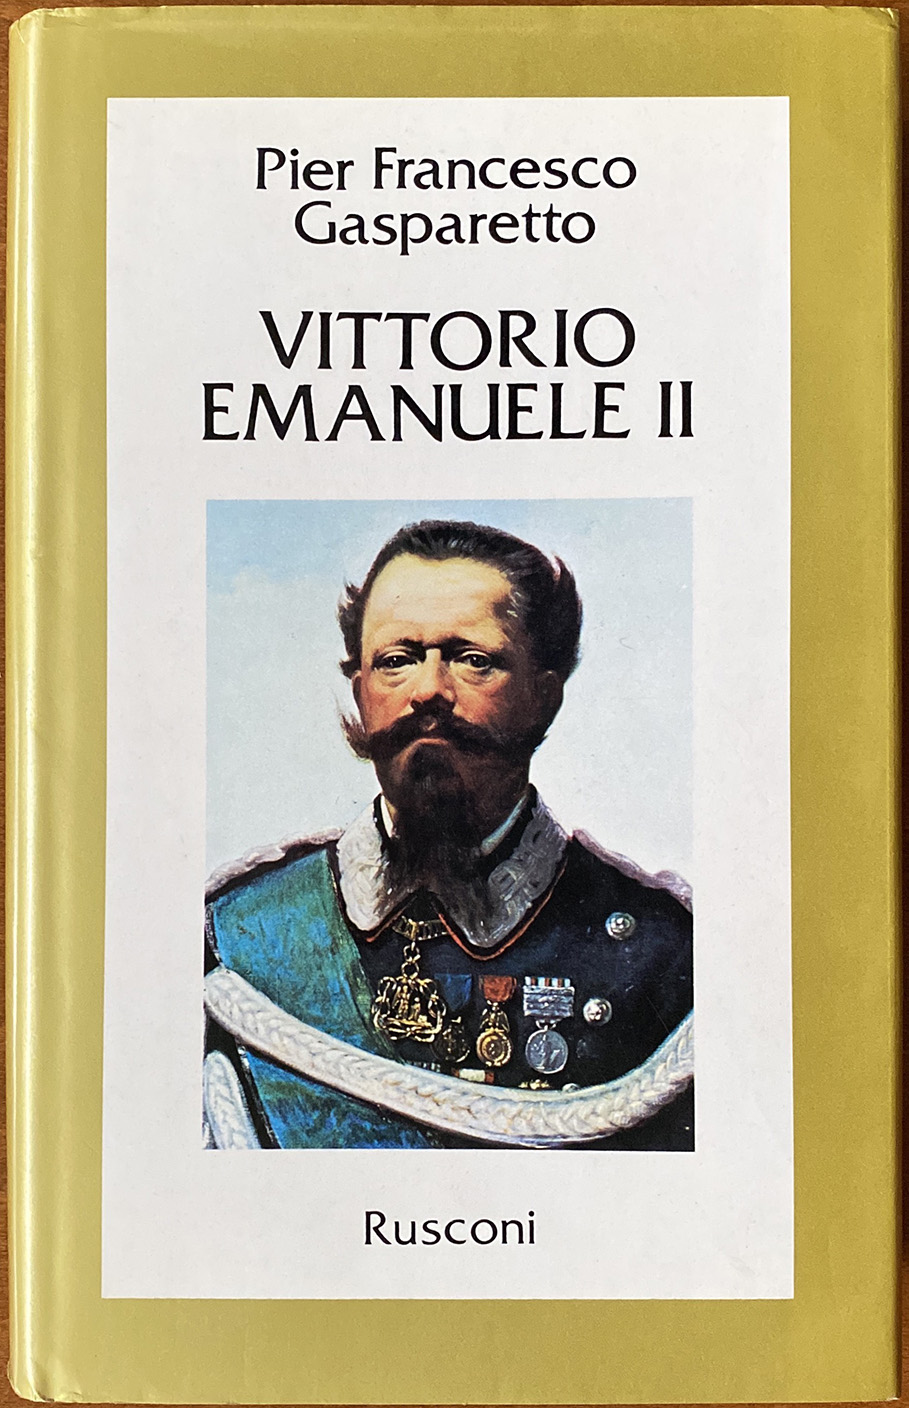 Pier Francesco Gasparetto, Vittorio Emanuele II, Ed. Rusconi, 1983